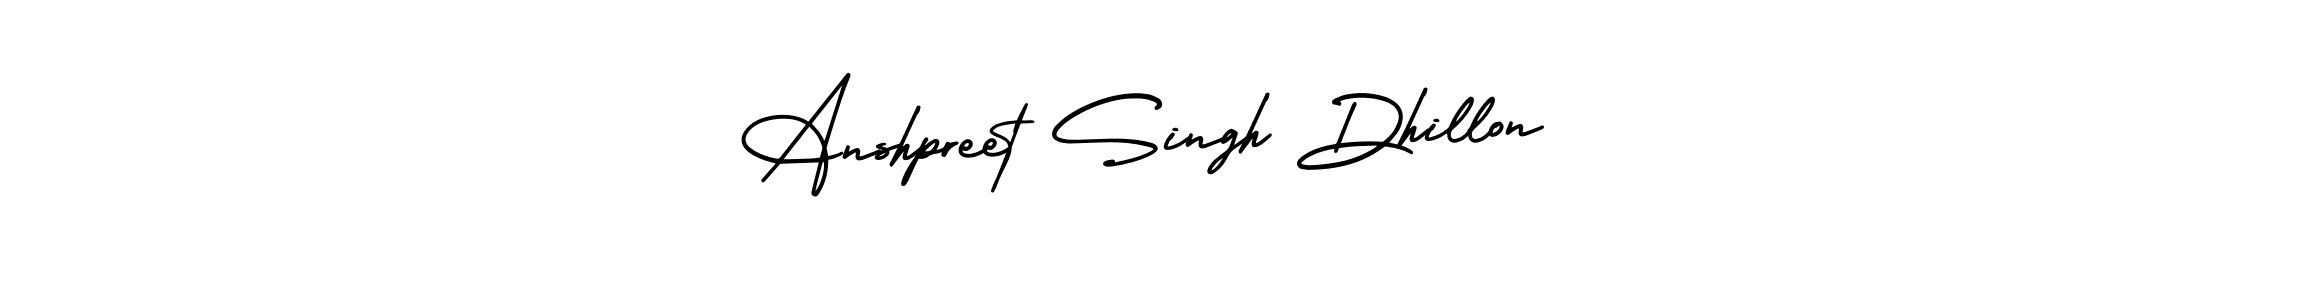 Best and Professional Signature Style for Anshpreet Singh Dhillon. AmerikaSignatureDemo-Regular Best Signature Style Collection. Anshpreet Singh Dhillon signature style 3 images and pictures png